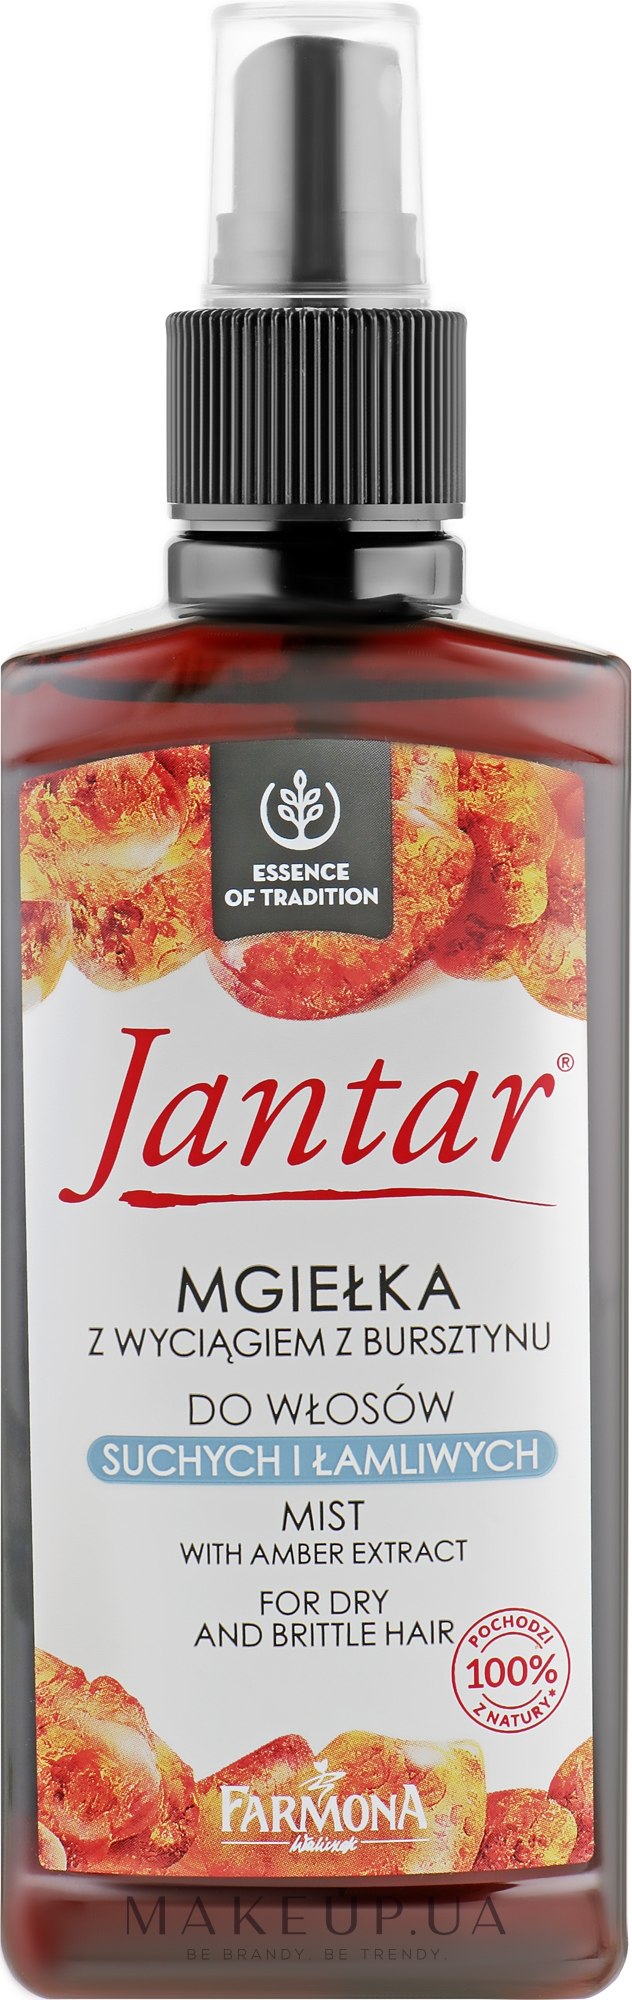 Мист-спрей с янтарным экстрактом для сухих и ломких волос - Farmona Jantar Mist For Dry And Brittle Hair — фото 200ml